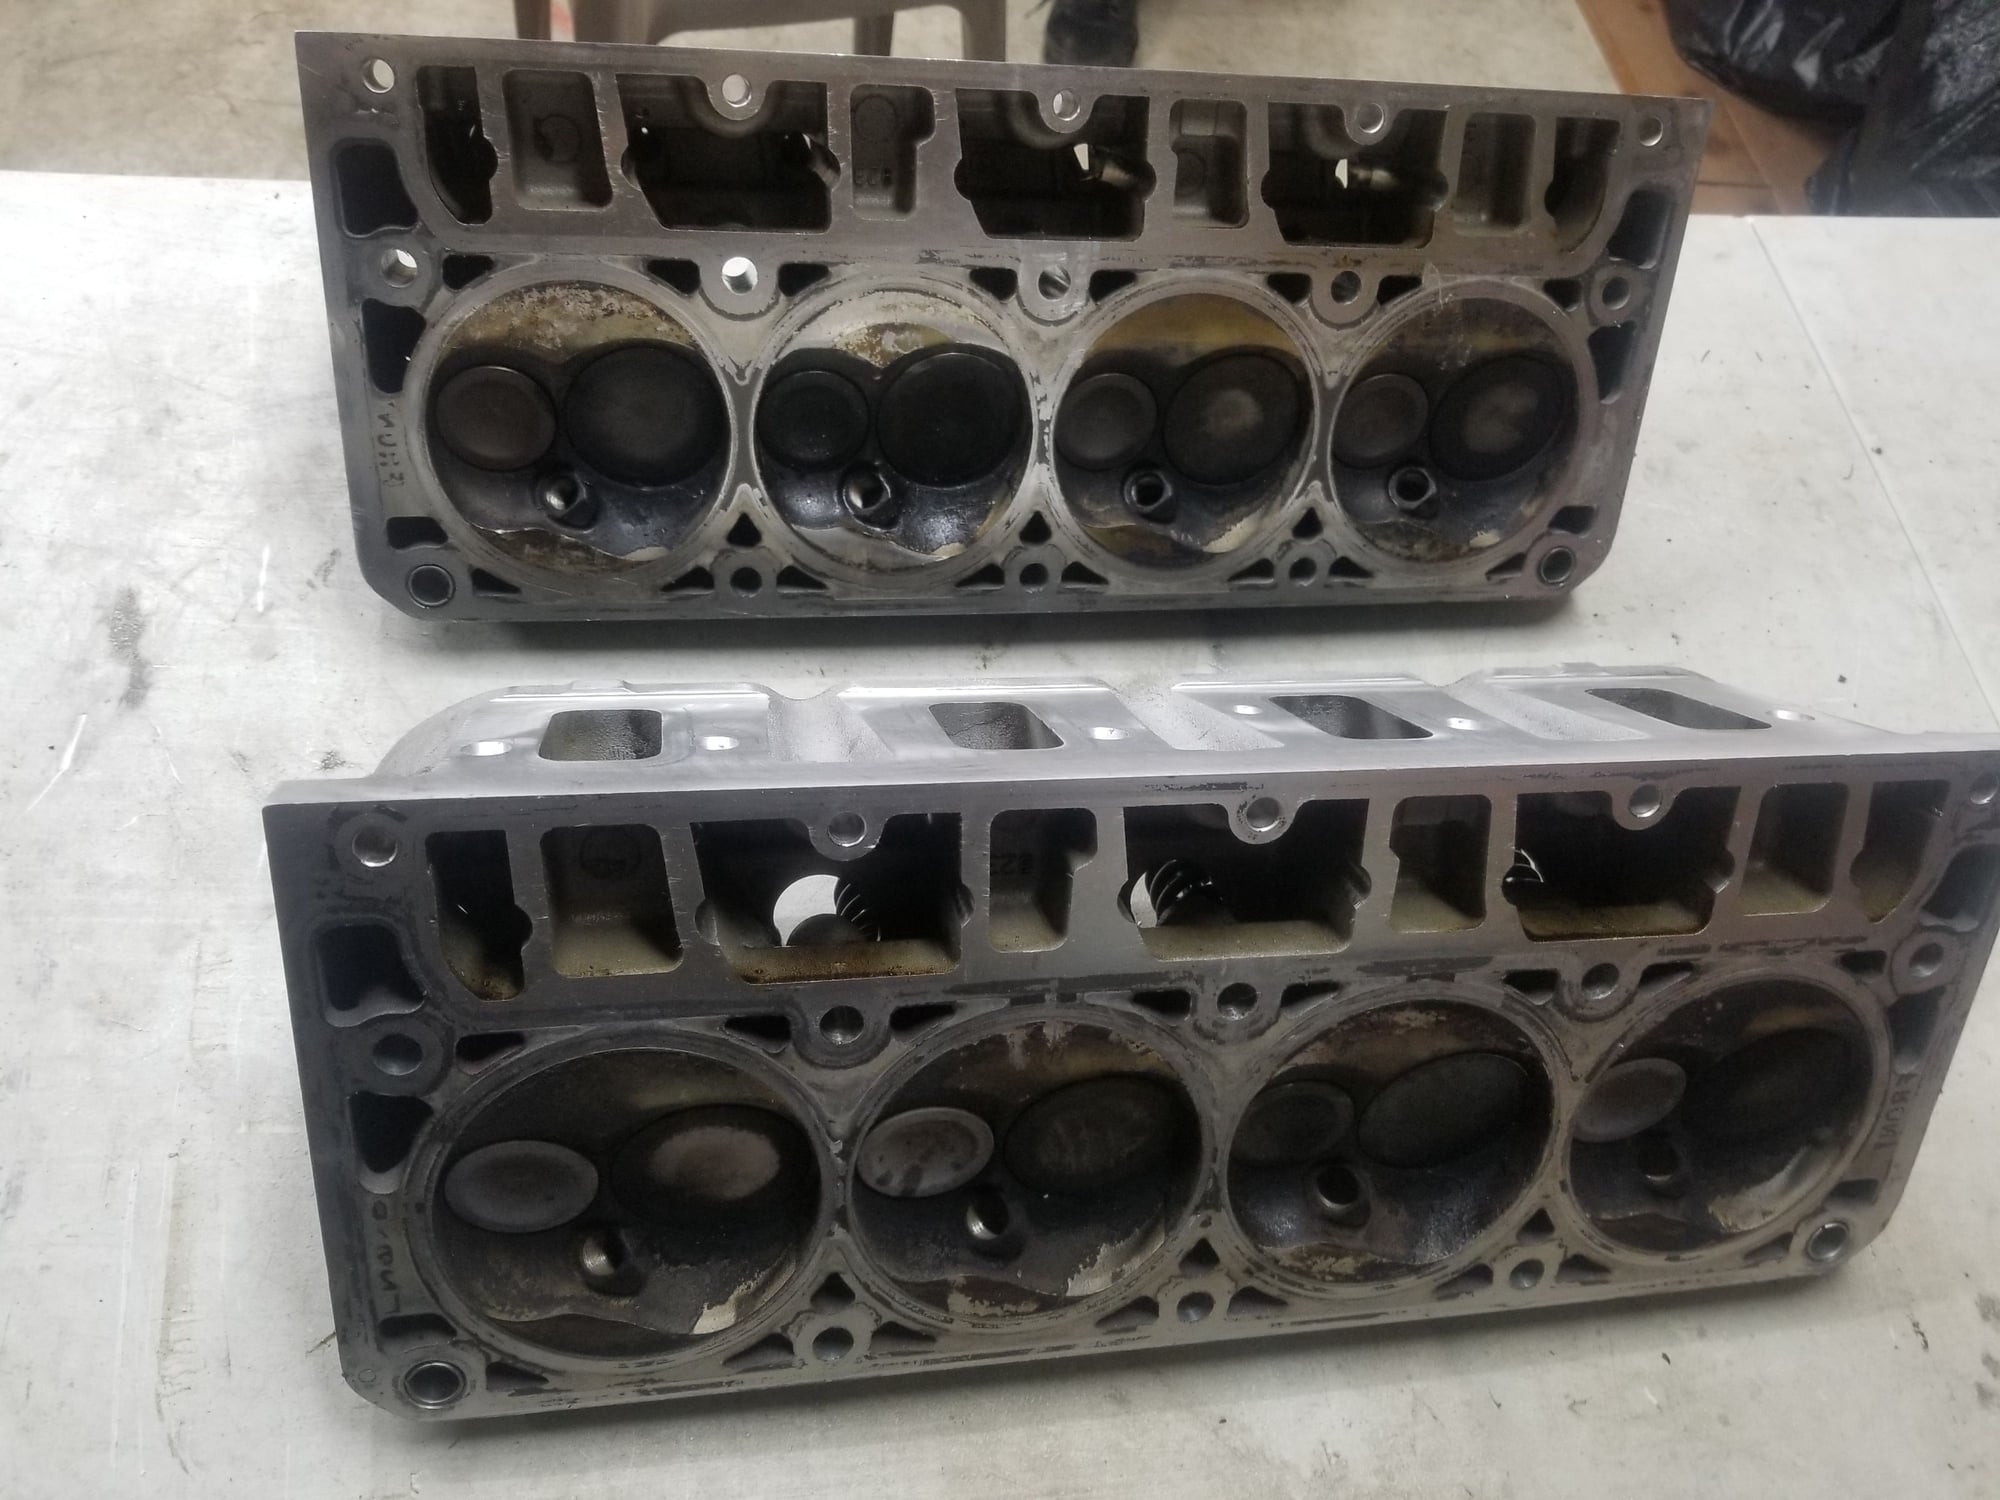 Engine - Internals - LS3/L92 cylinder heads,rockers,valve covers - Used - Warren, MI 48089, United States